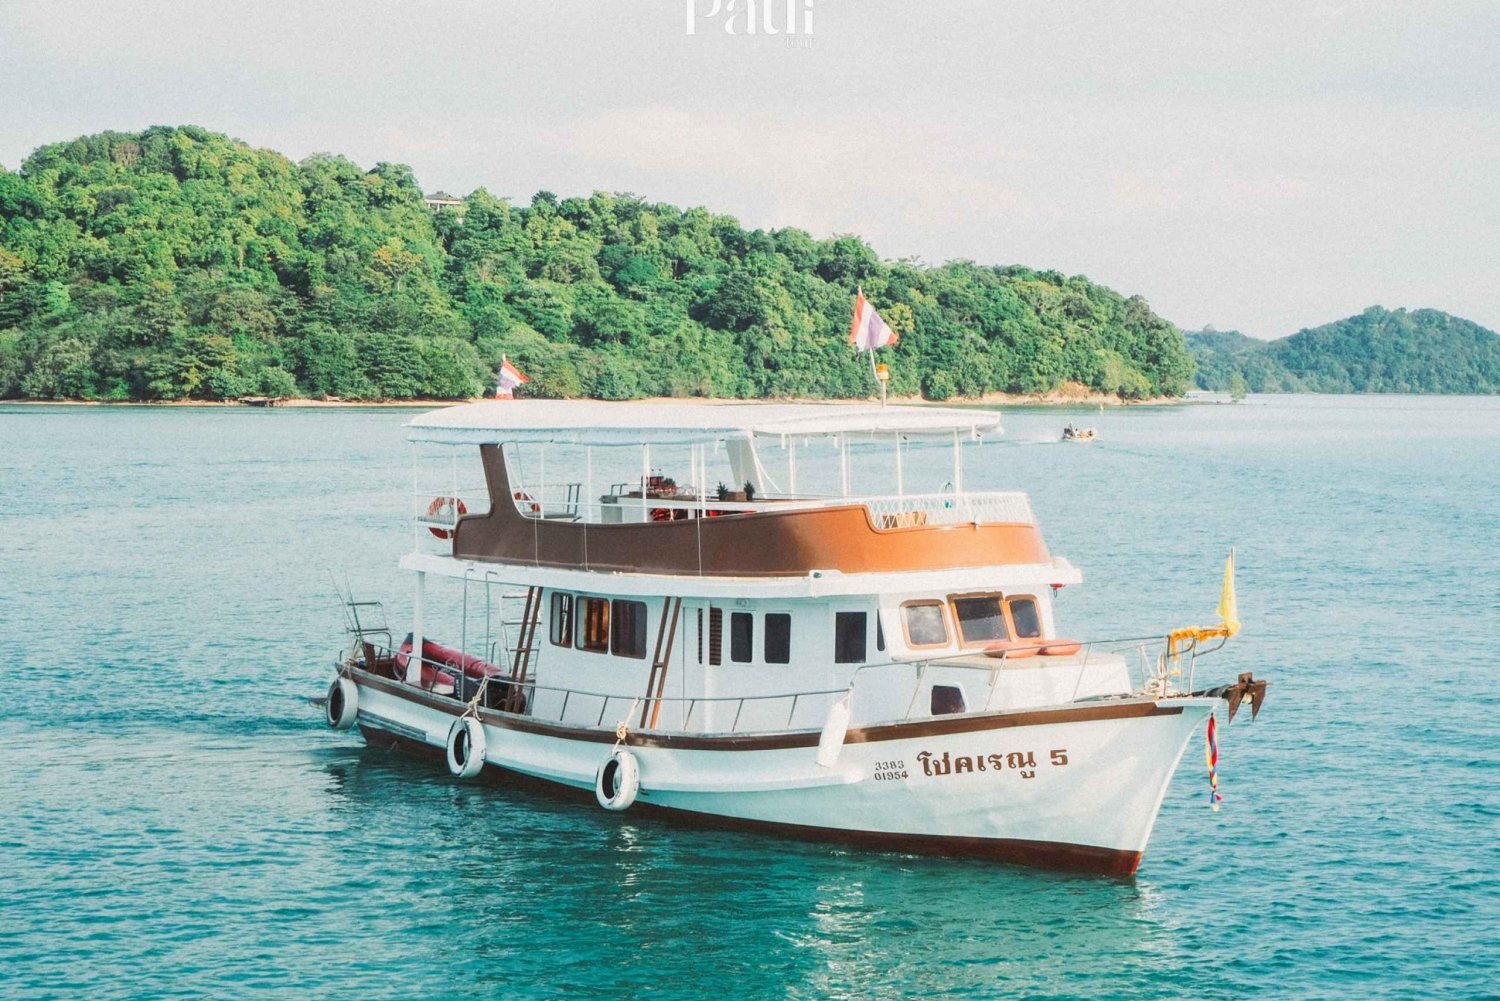 Phuket: James Bond Island ja melonta päiväretki veneellä.